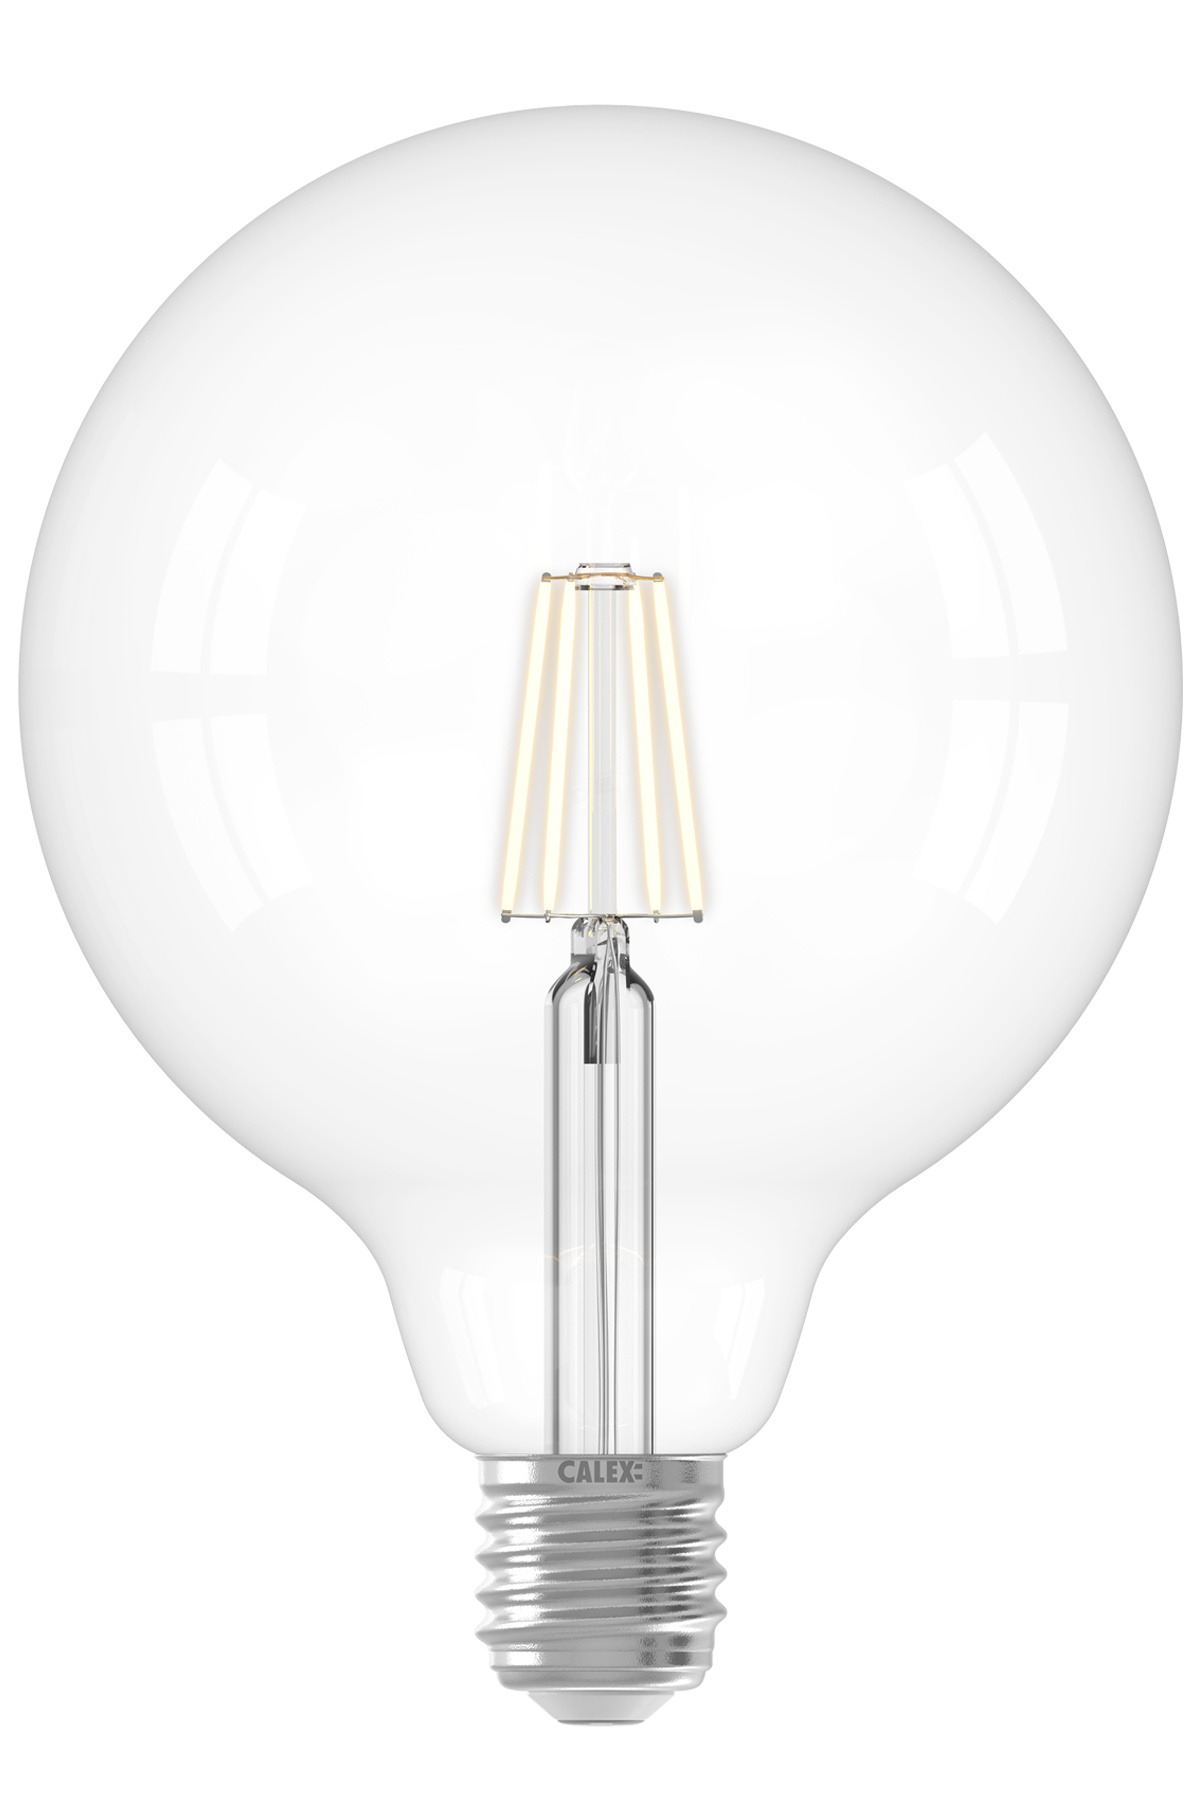 Proberen Oneerlijk Vrijstelling LED lamp globe Calex helder (G125 Ø125mm E27) - Kynda Light